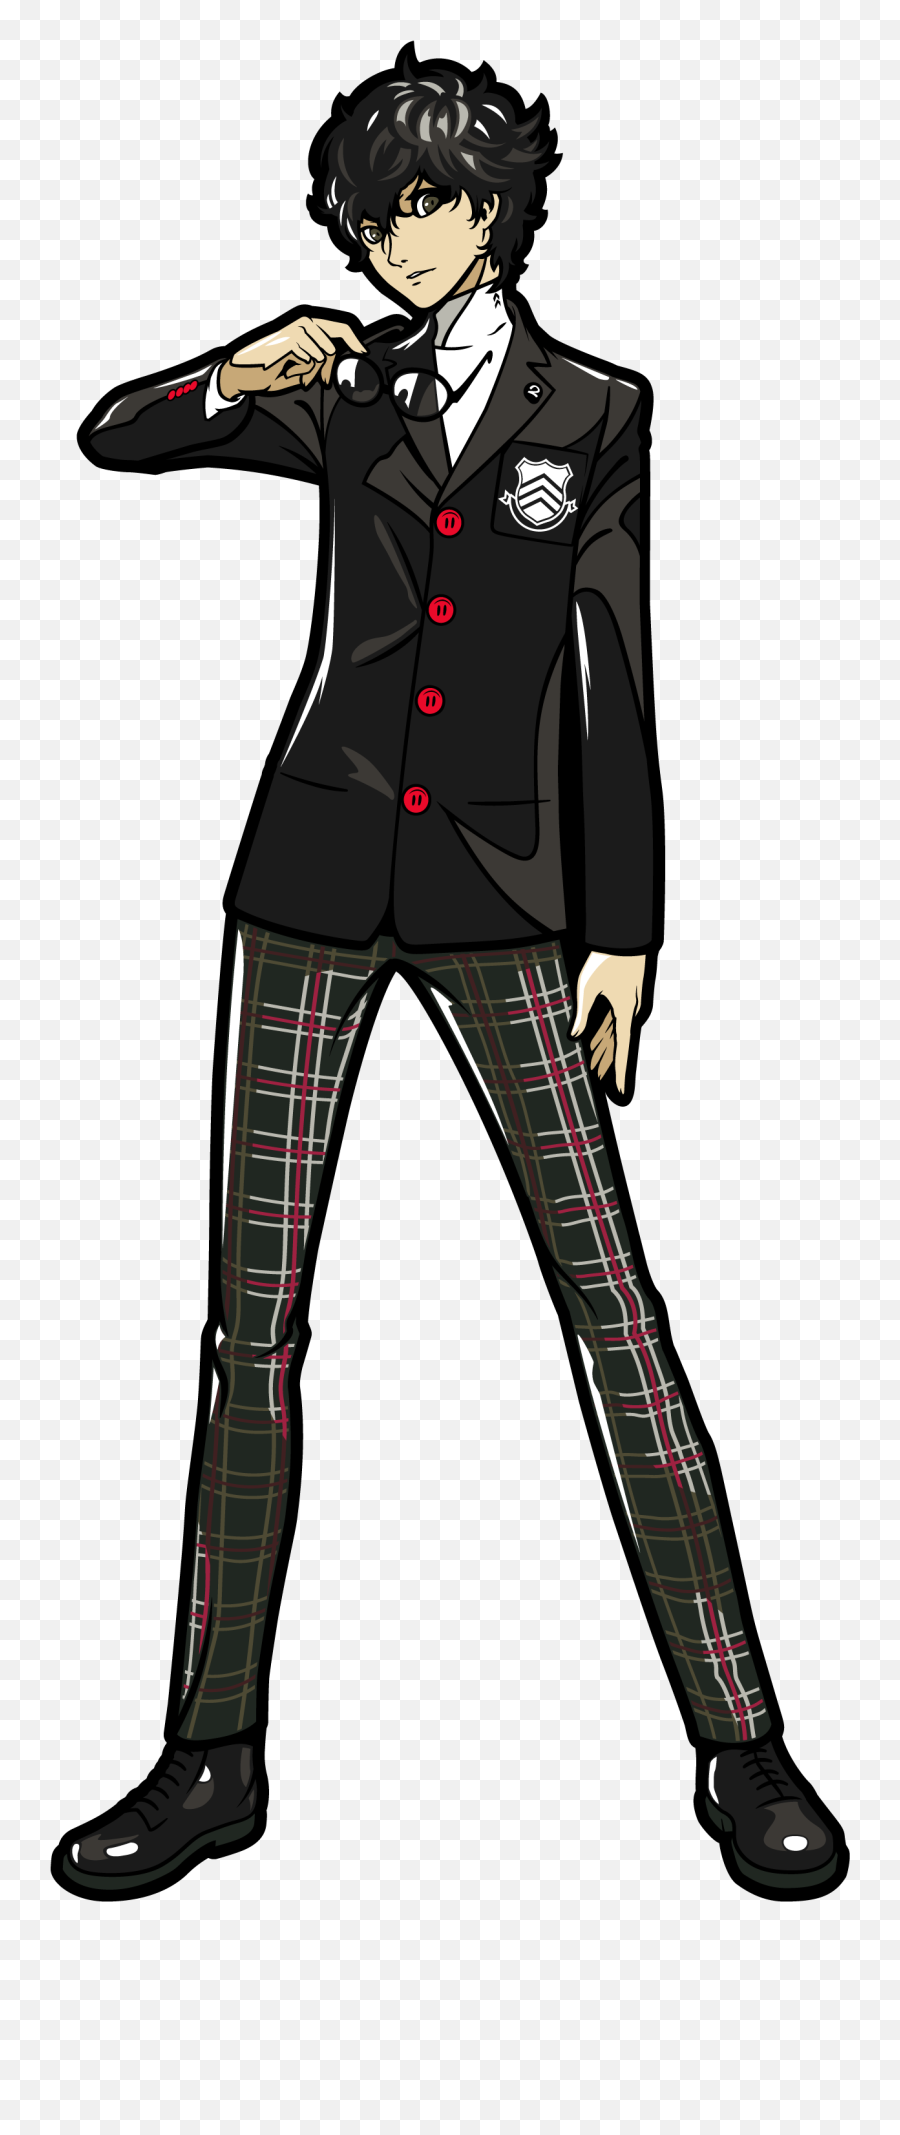 Persona 5 - Concept Art Persona 5 Protagonist Png,Persona 5 Png